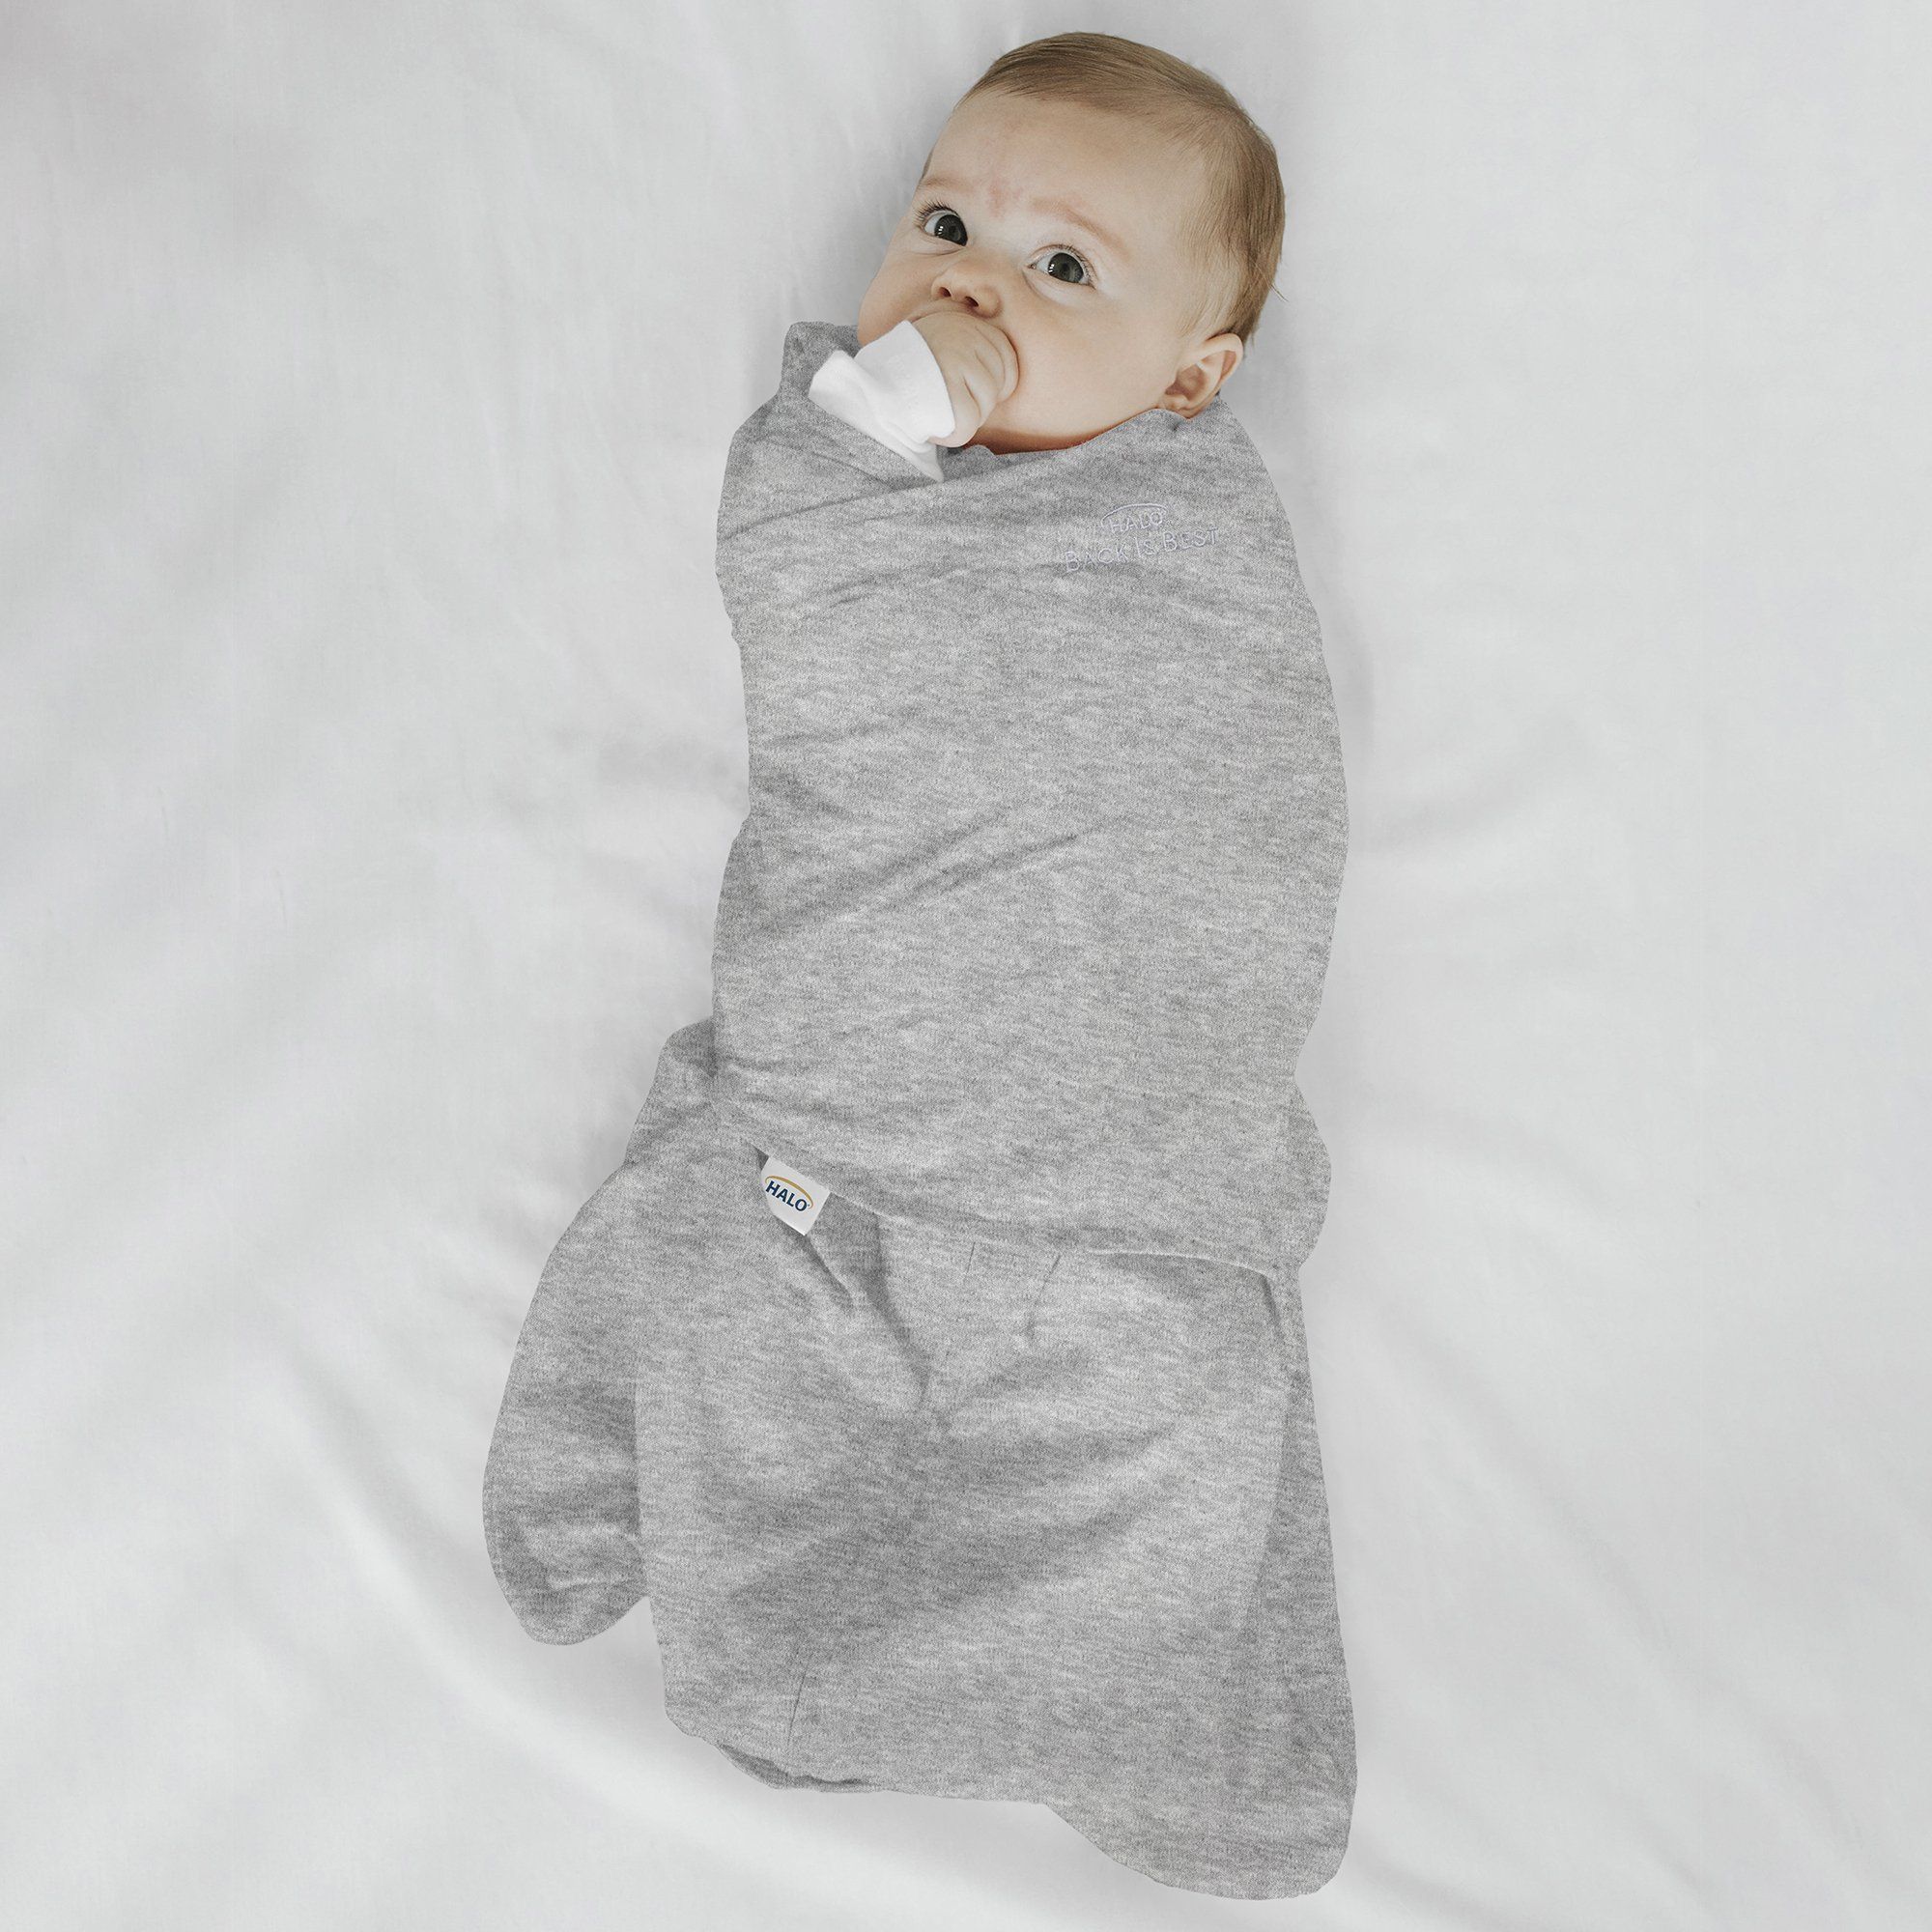 HALO SleepSack Swaddle, Heather Gray, Newborn (0 to 3 Months) - 1 ct